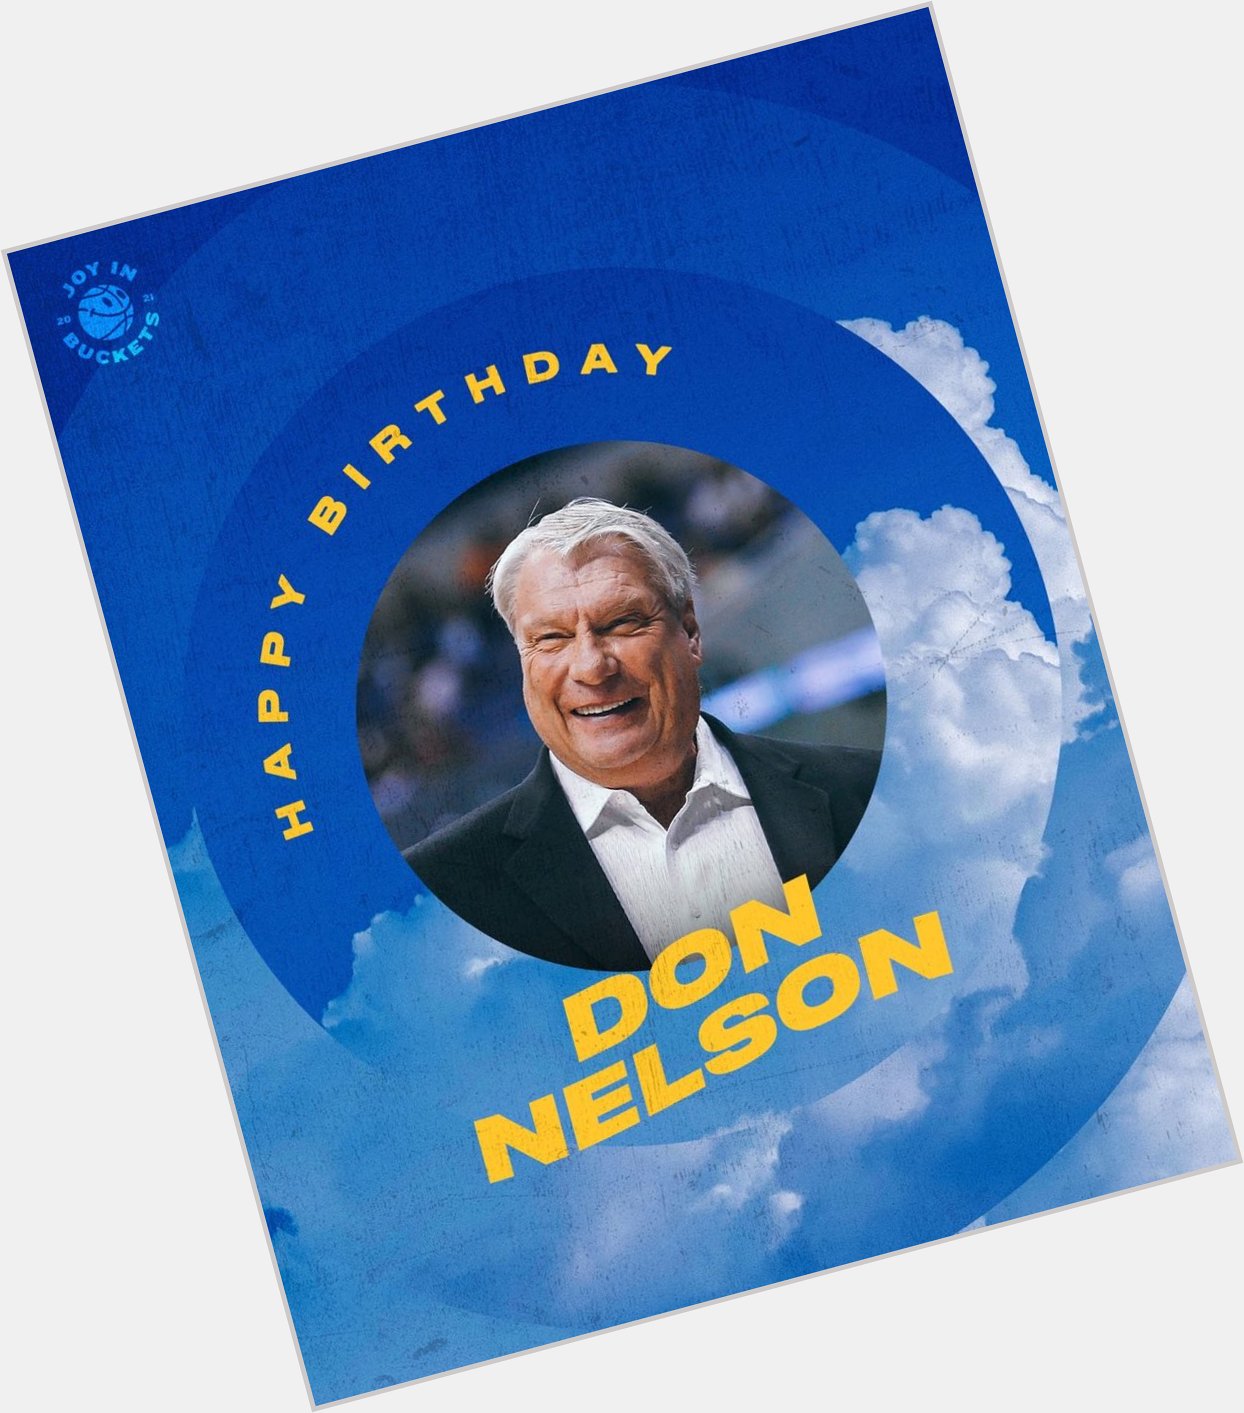 Happy birthday to Don Nelson !!      